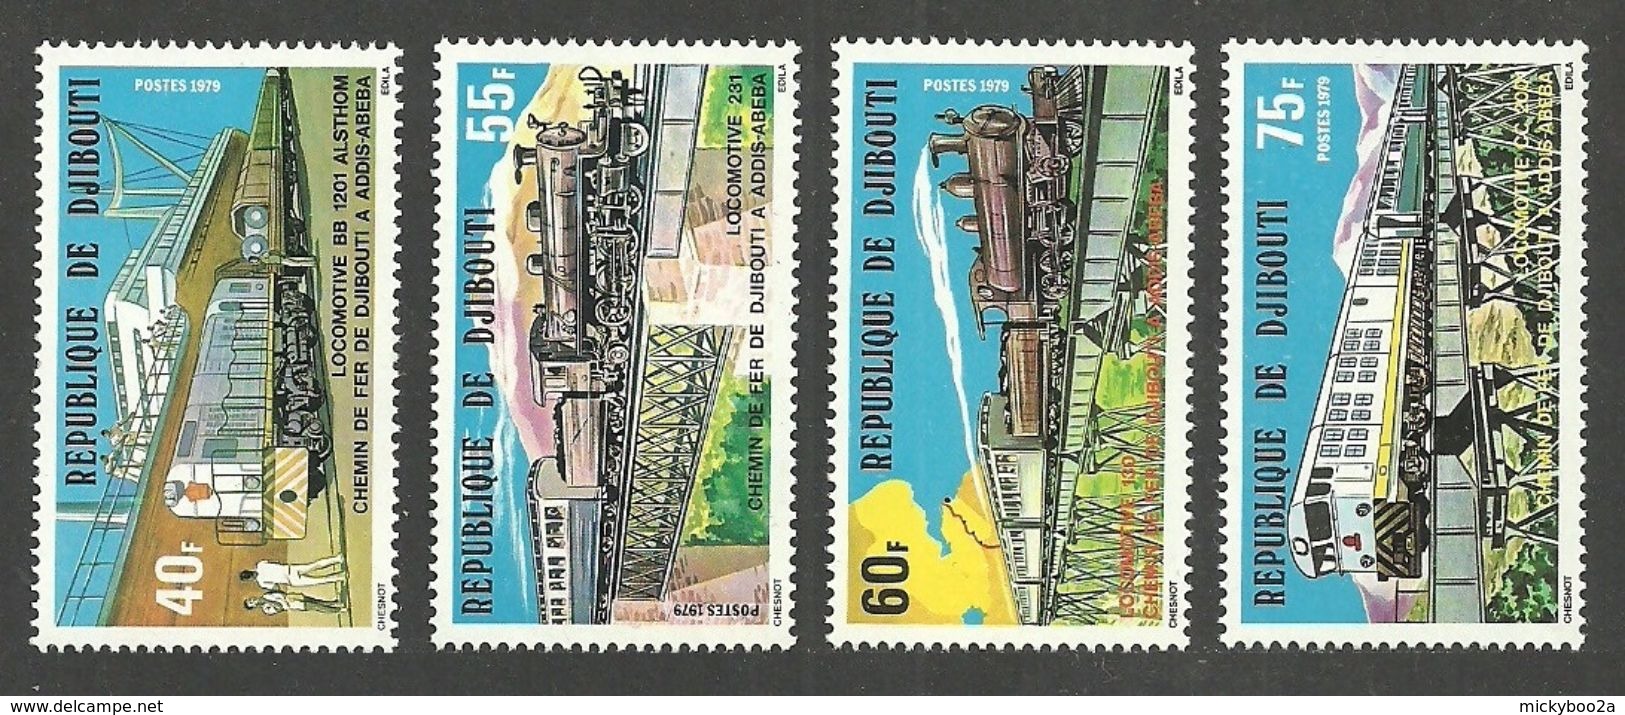 DJIBOUTI 1979 TRAINS RAILWAYS SHIPS BRIDGES ADDIS ABABA RAILWAY SET MNH - Yibuti (1977-...)